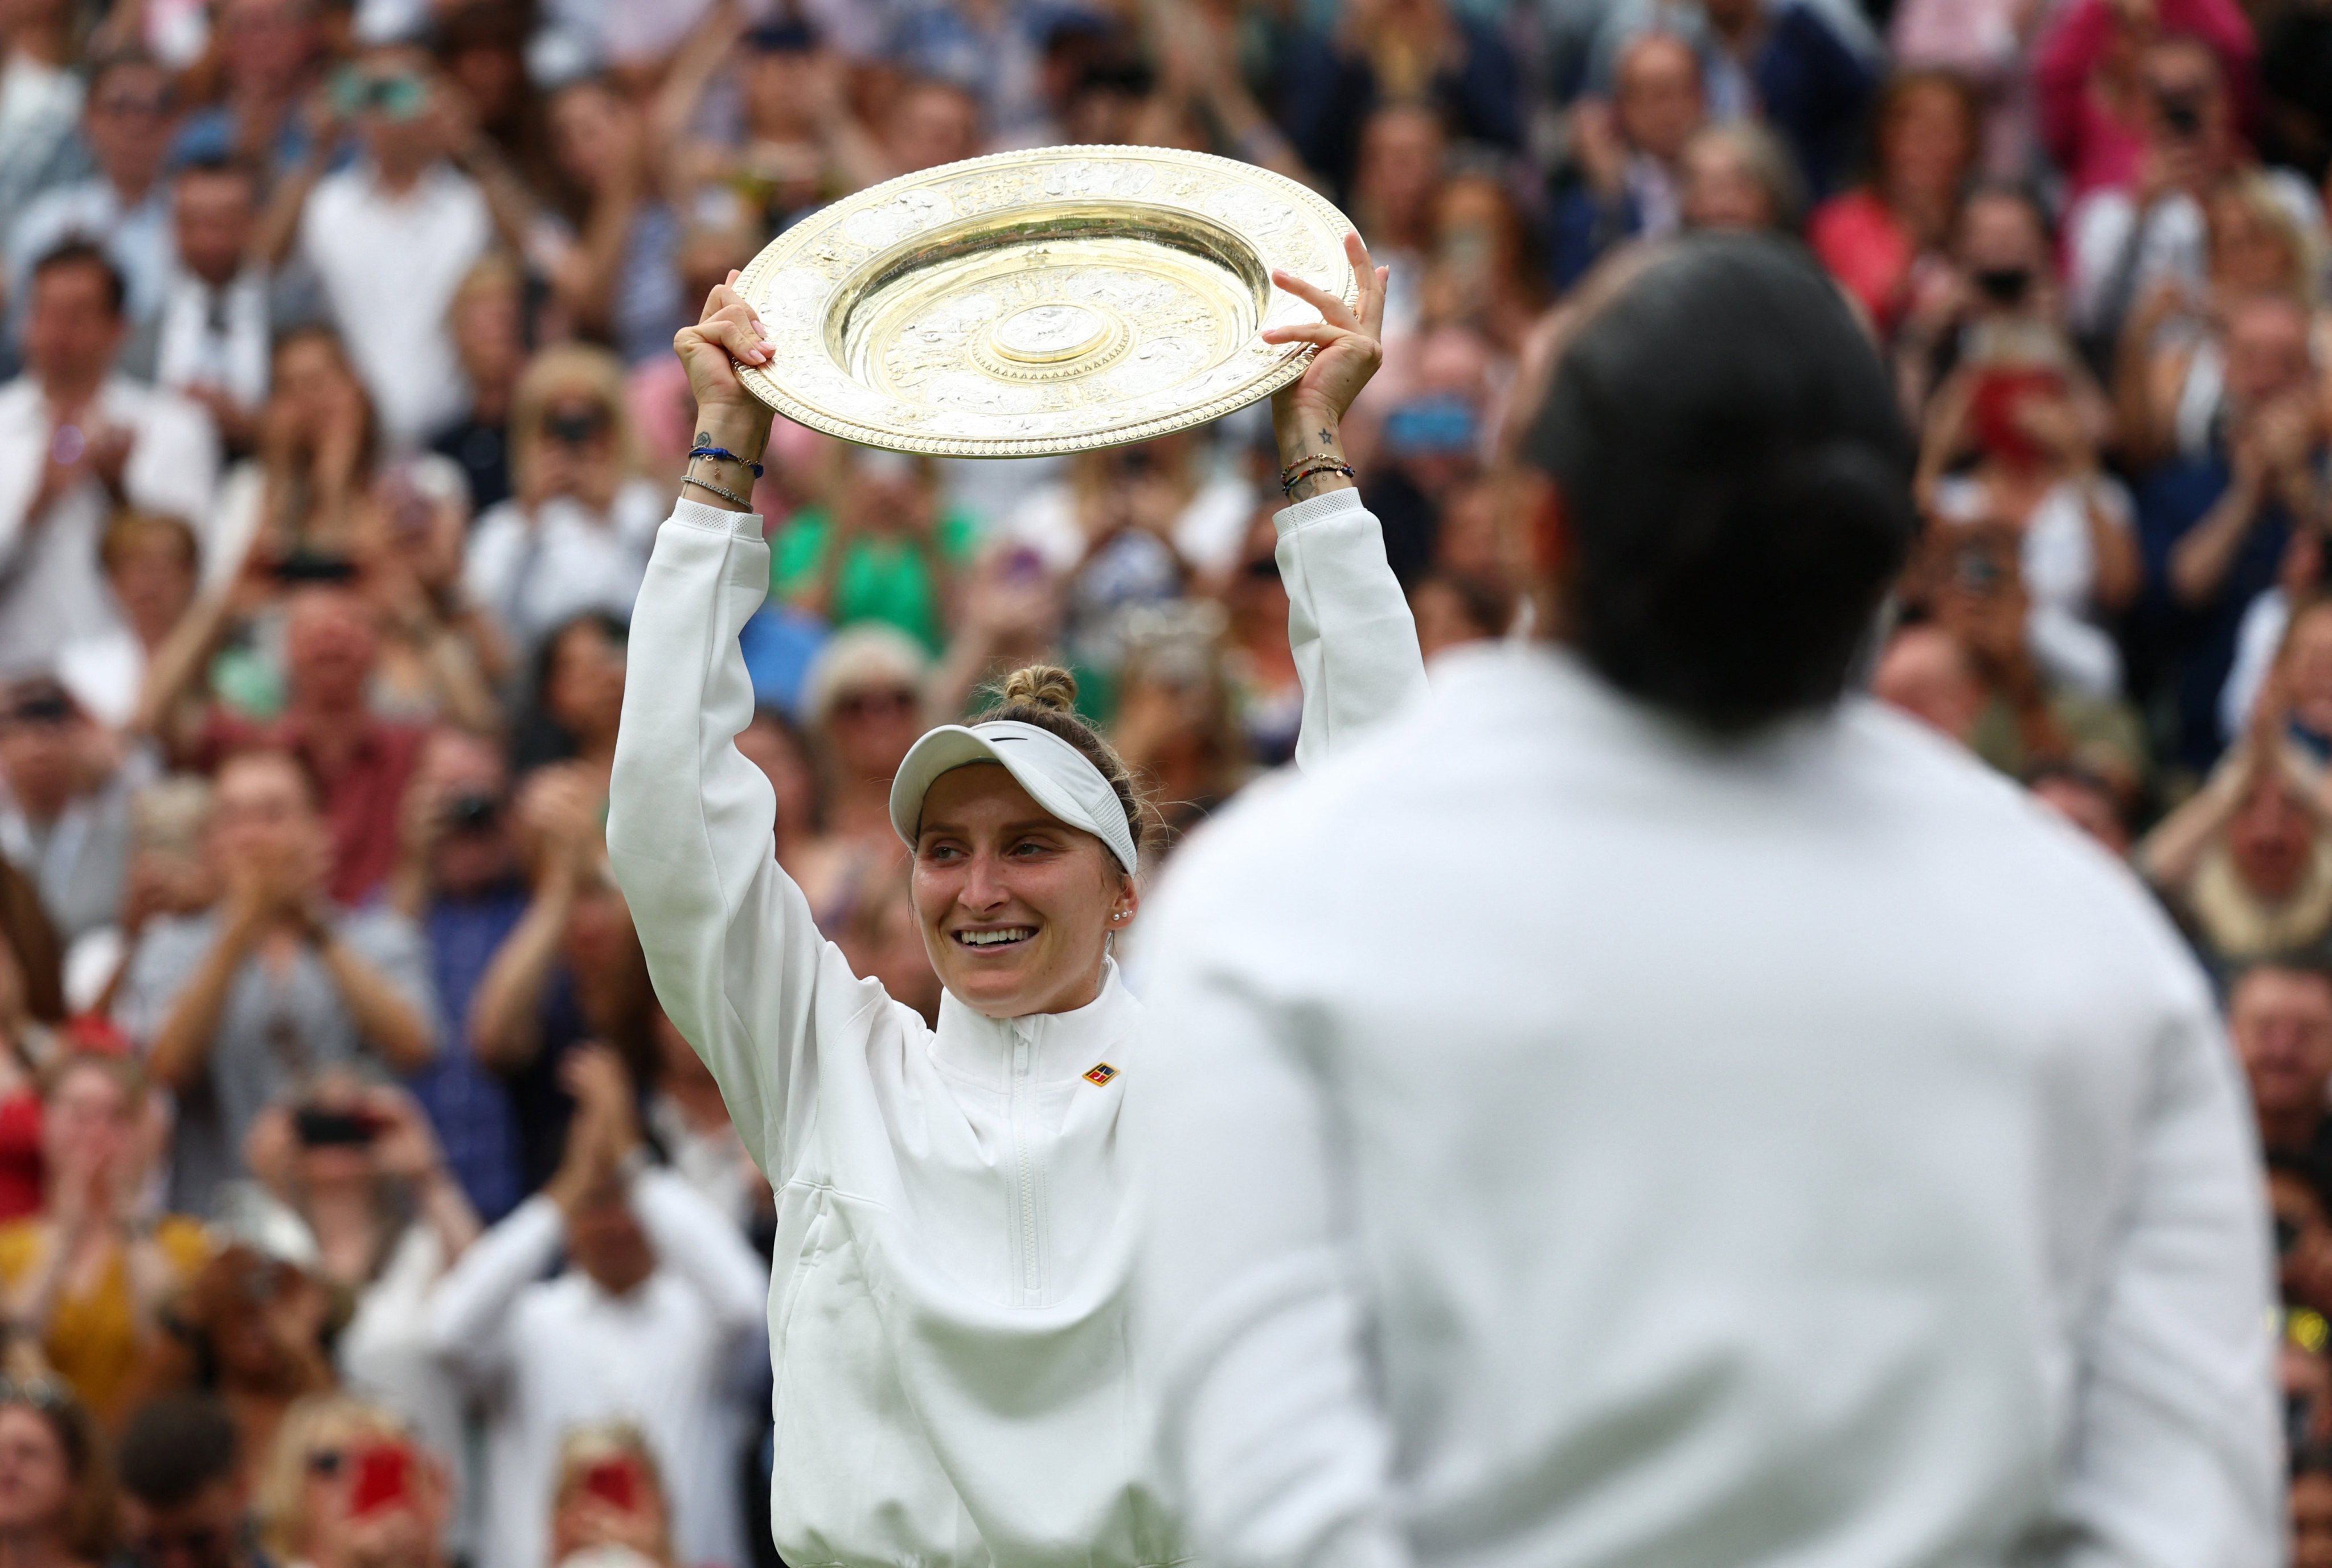 The Czech Republic’s Marketa Vondrousova celebrates after winning the women’s singles title at Wimbledon. Photo: Reuters